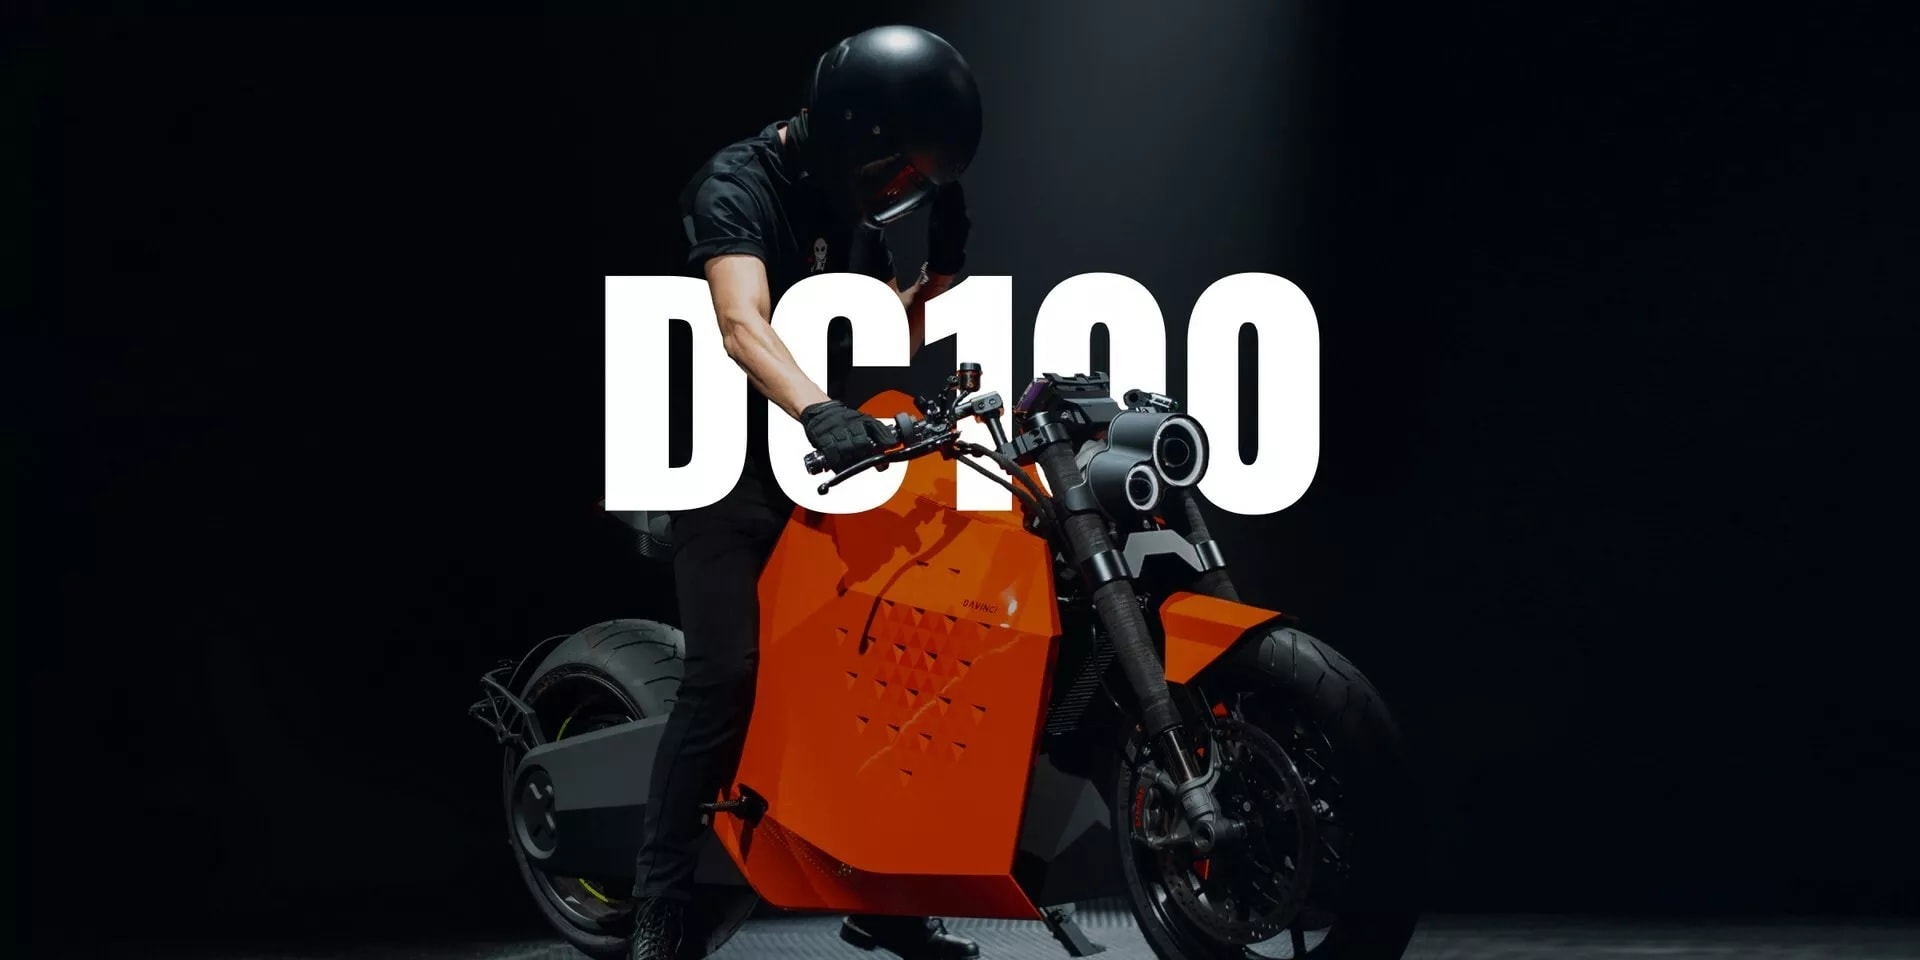 Davinci Motor DC100 e-motorcycle